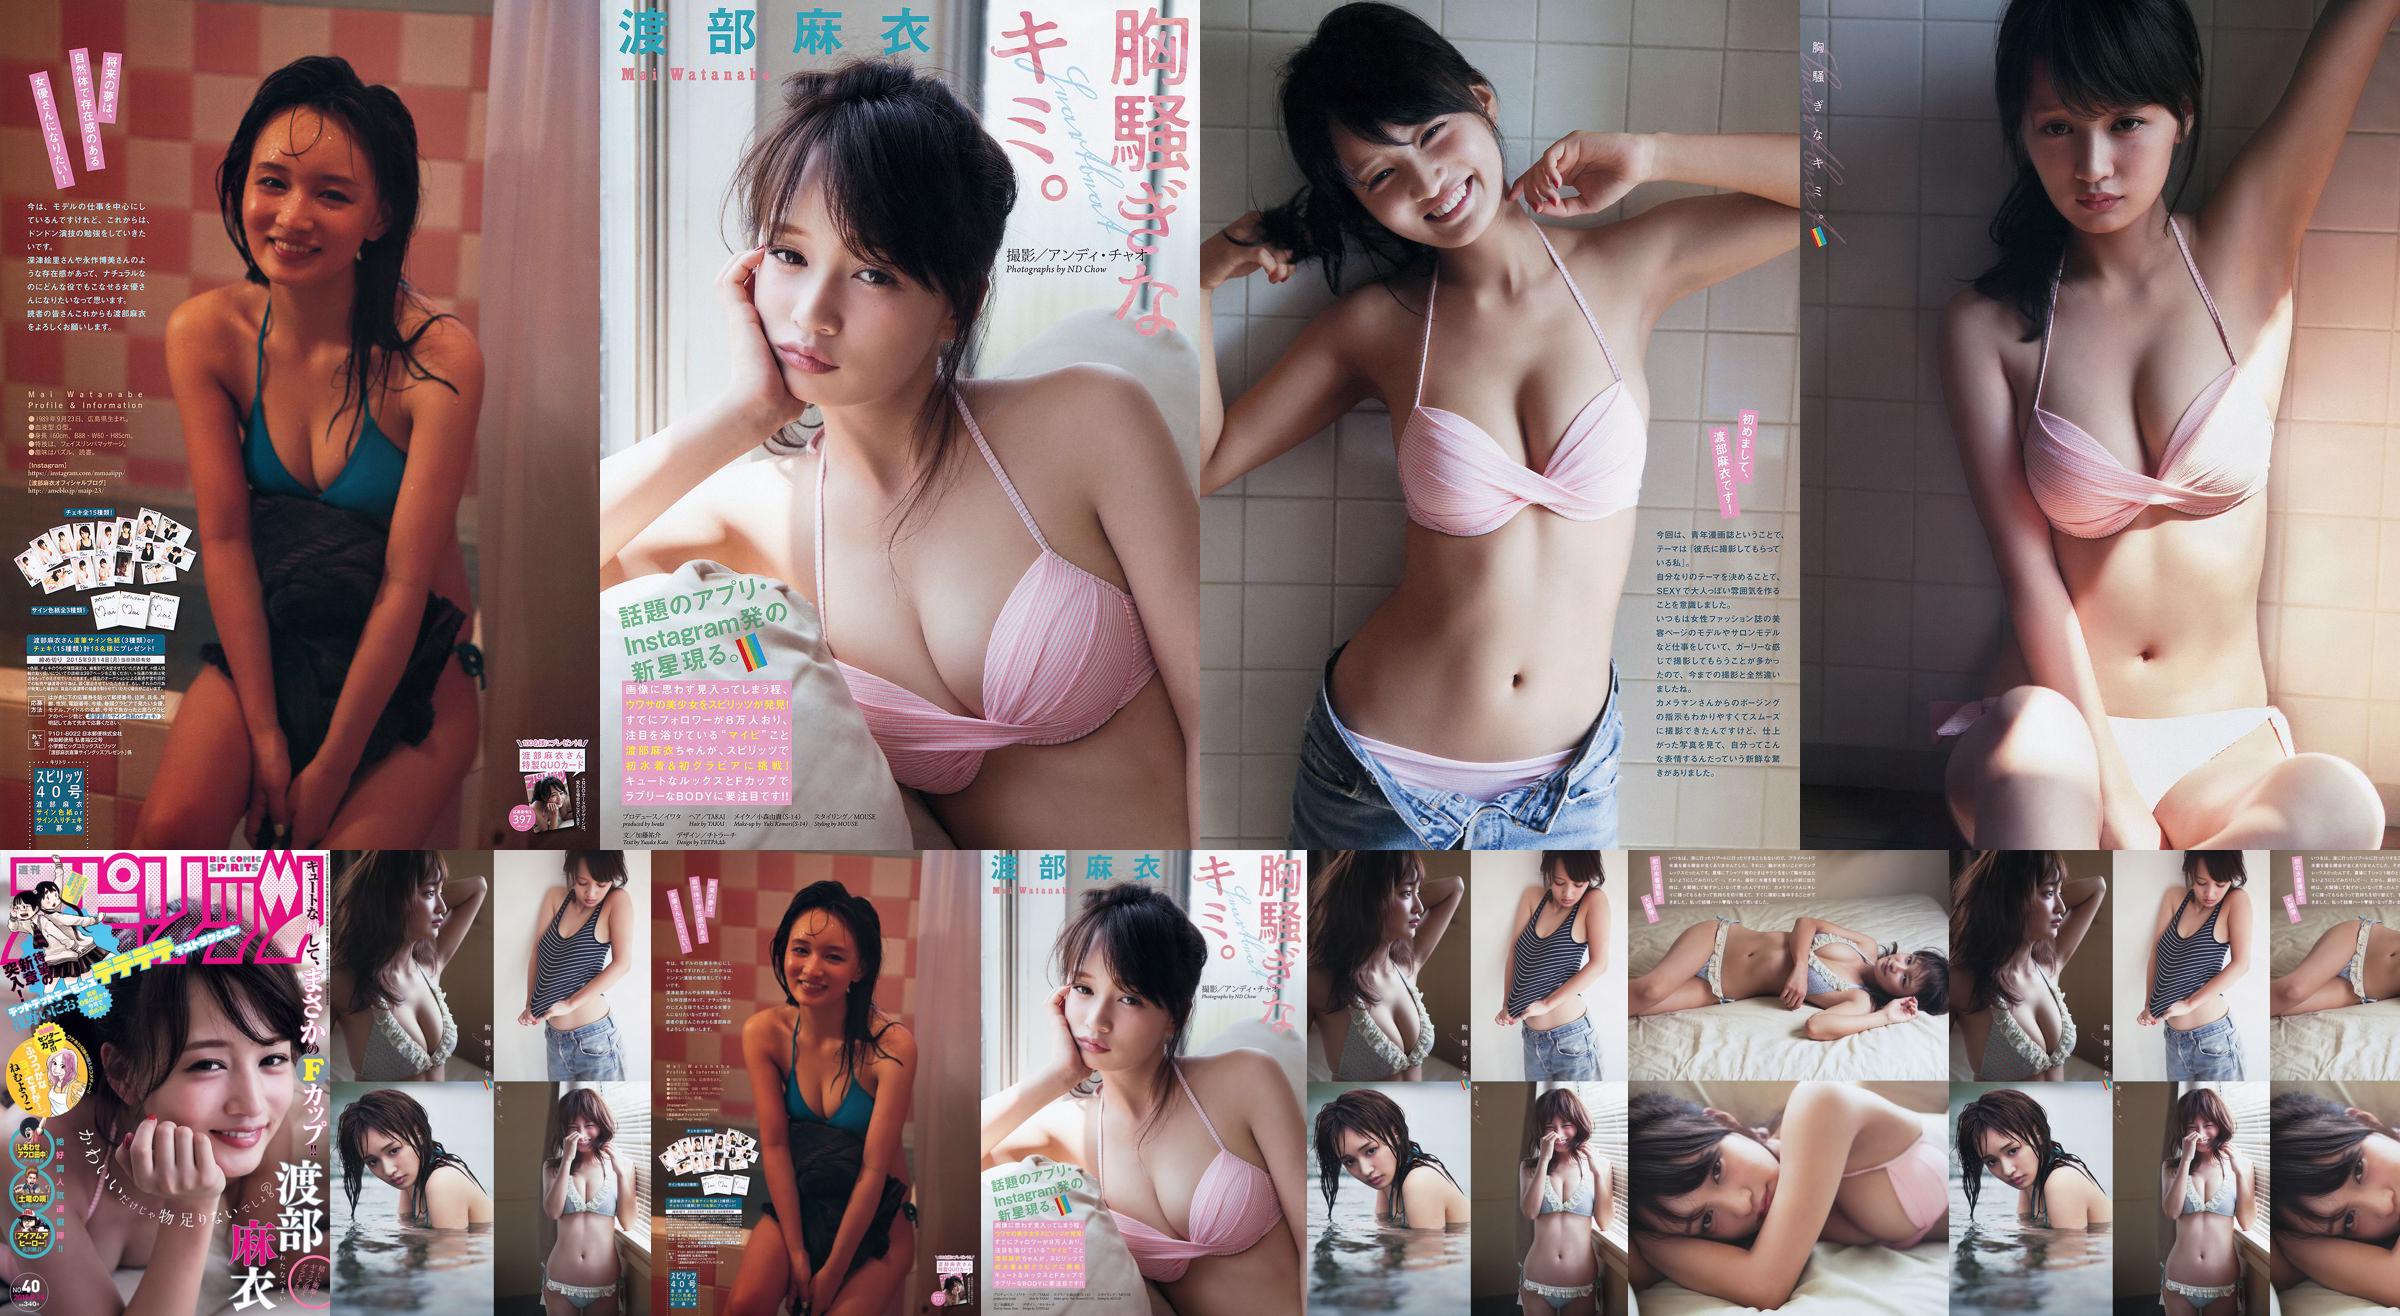 [Wöchentliche große Comic-Spirituosen] Watanabe Mai 2015 Nr. 40 Fotomagazin No.da031d Seite 4